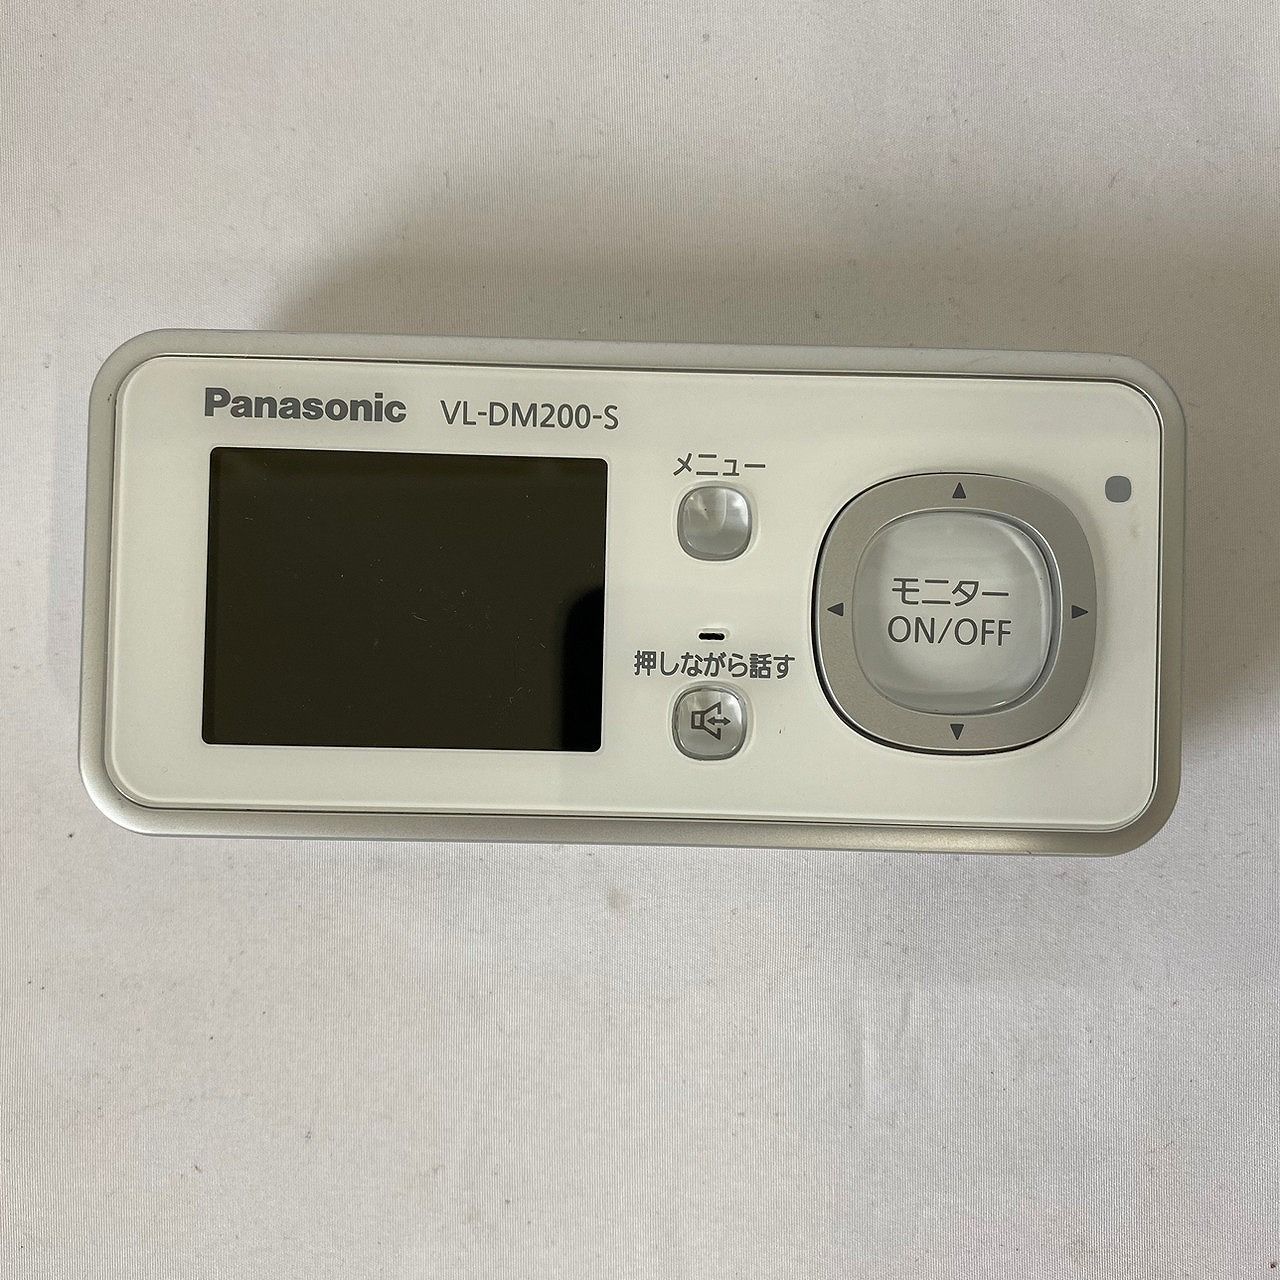 Panasonic ドアモ二 VL-SDM200 株式会社おくしん堂 メルカリ